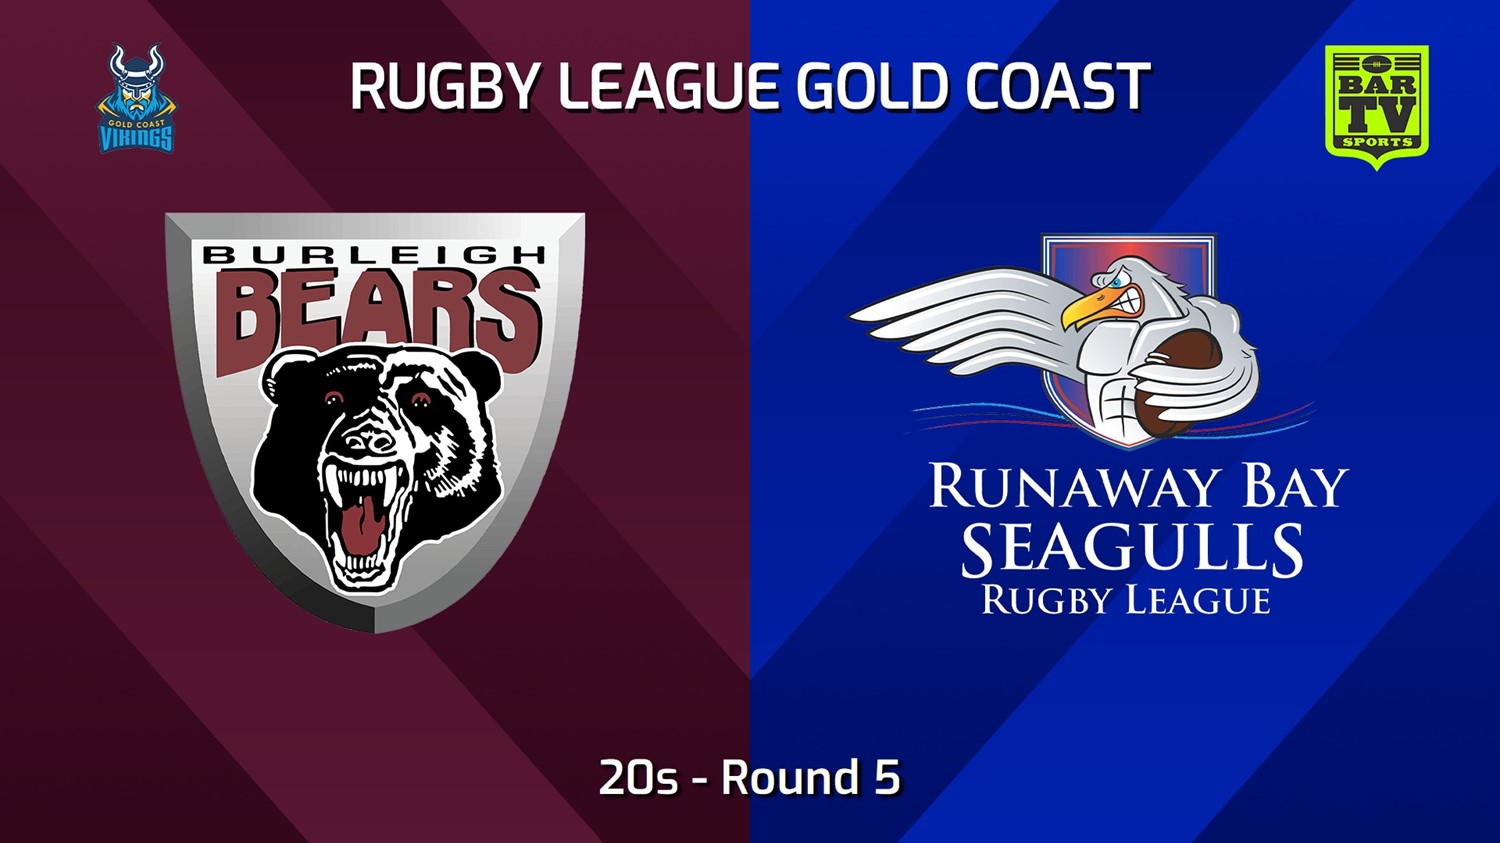 240526-video-Gold Coast Round 5 - 20s - Burleigh Bears v Runaway Bay Seagulls Slate Image